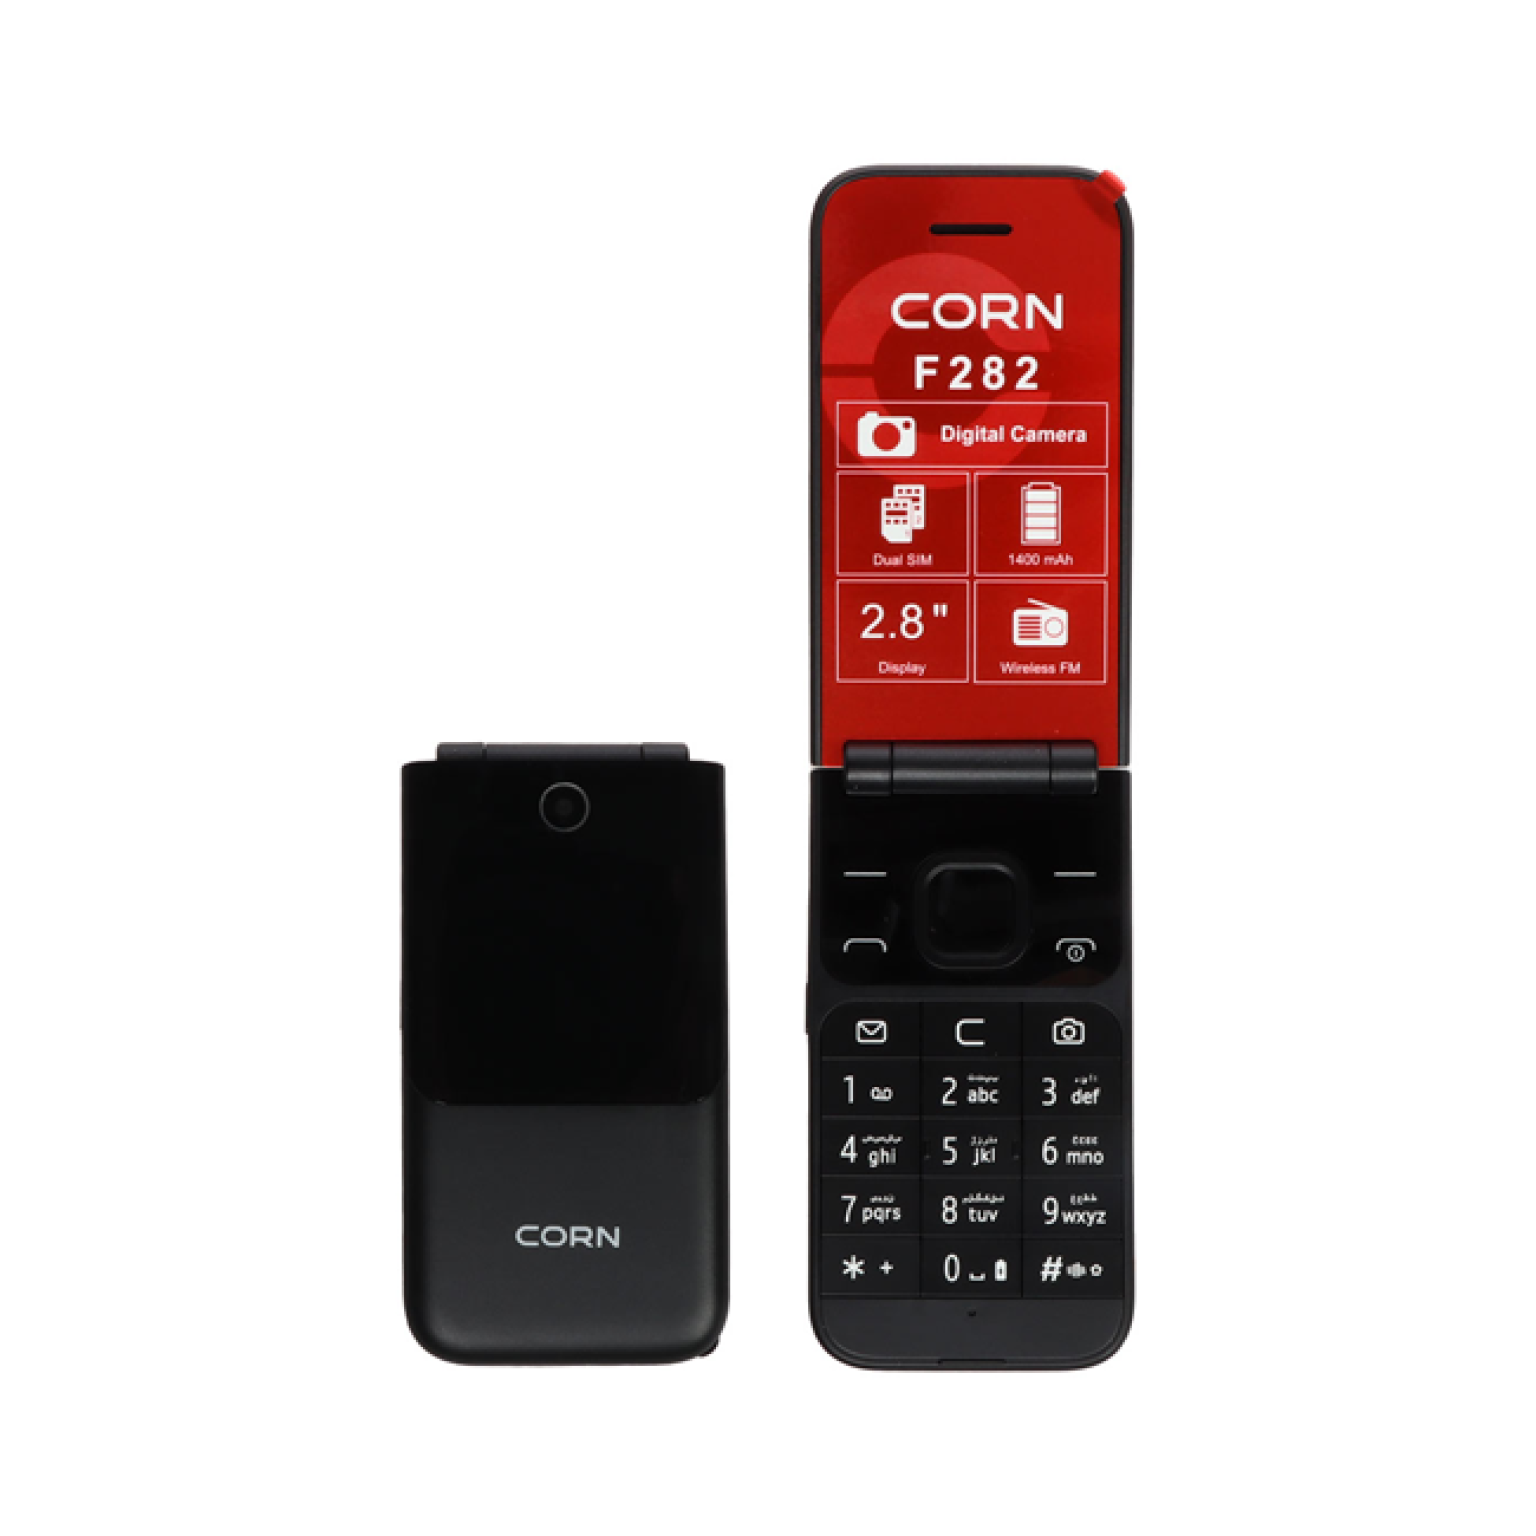 CORN mobile phone model F282 black